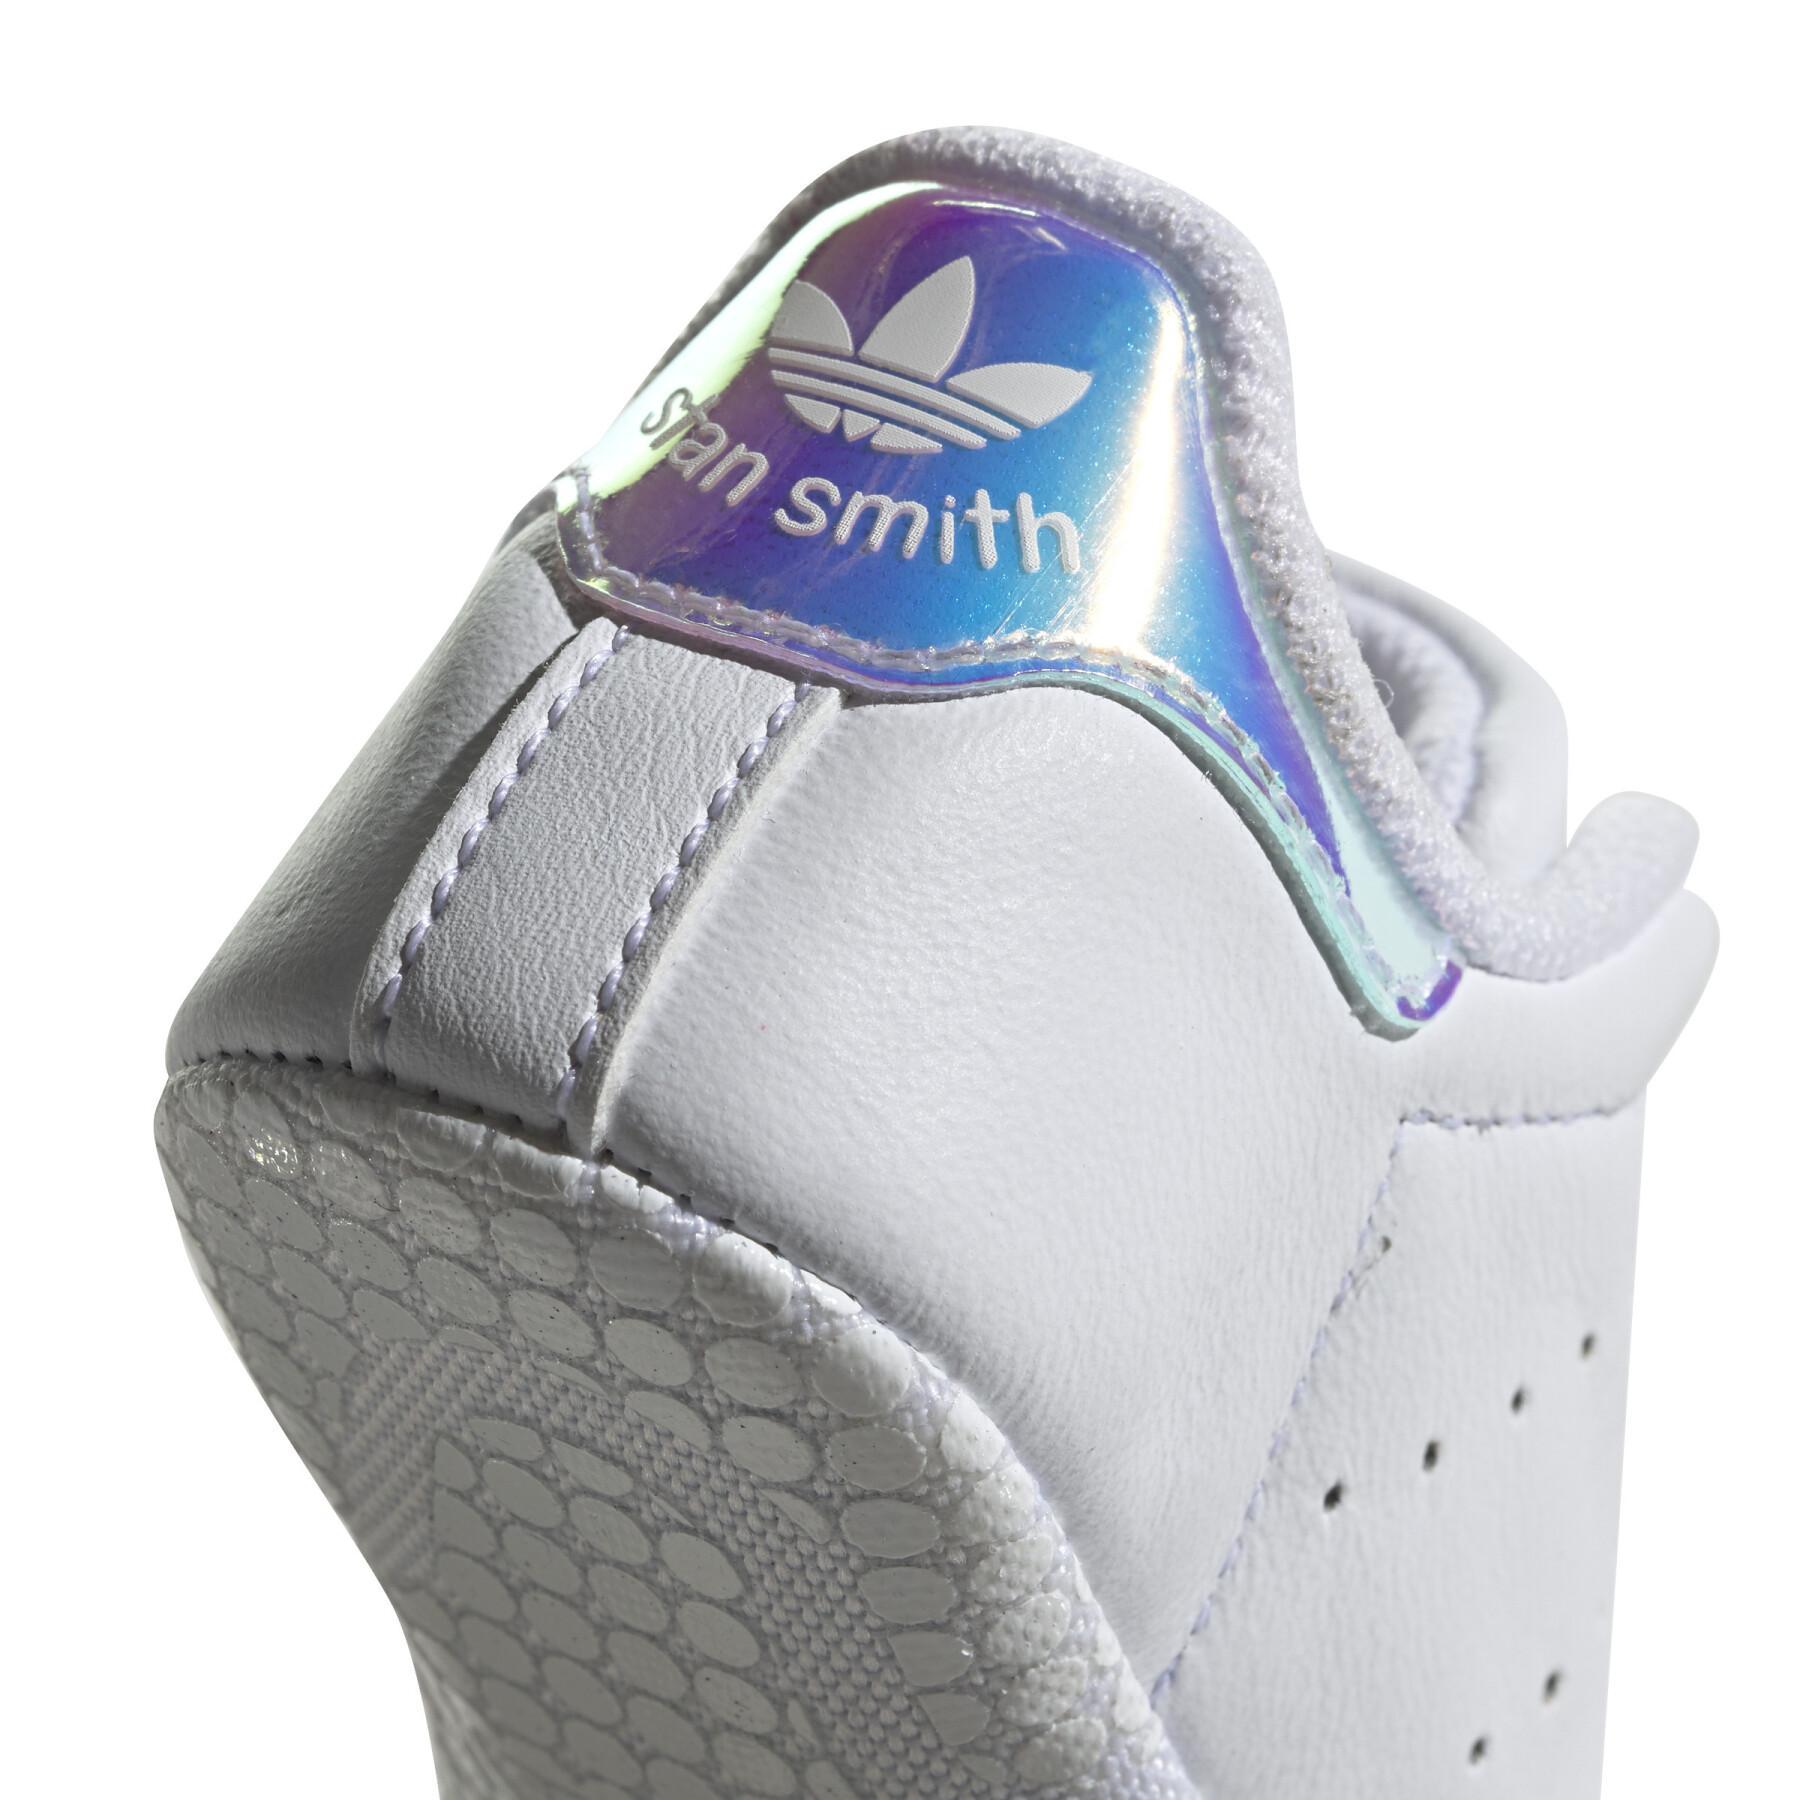 Zapatillas adidas Stan Smith para bebé